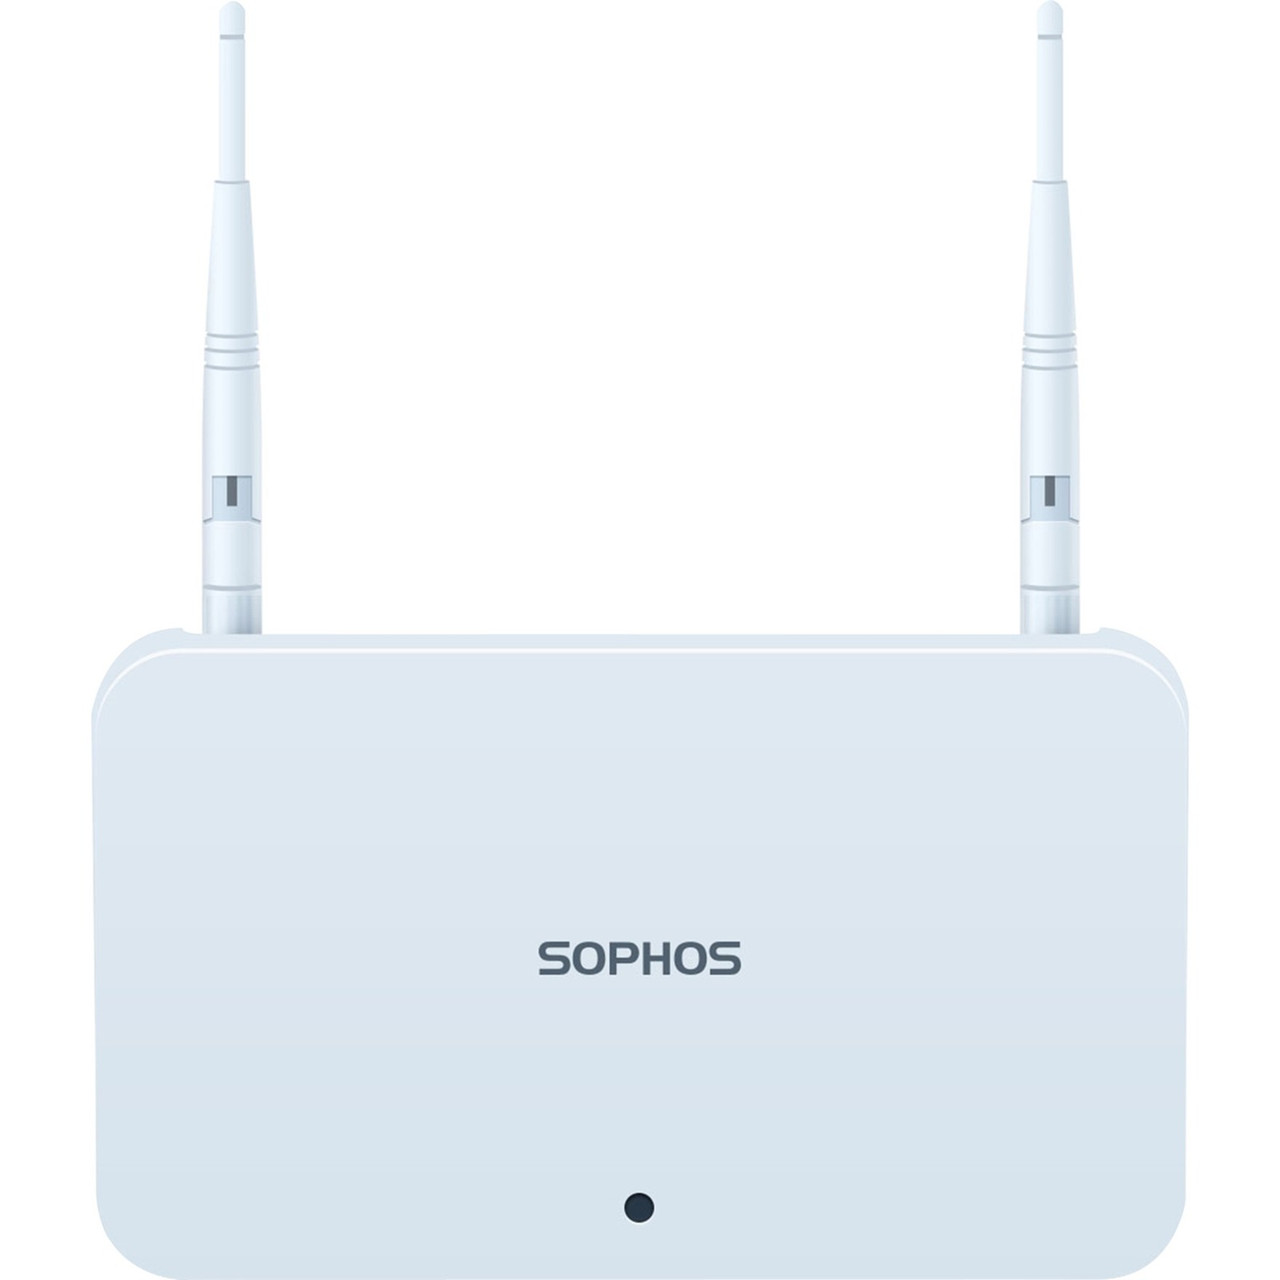 Sophos AP 15 IEEE 802.11n 300 Mbit/s Wireless Access Point - 2.40 GHz - MIMO Technology - 1 x Network (RJ-45) - Gigabit Ethernet - Wall Mountable, Desktop